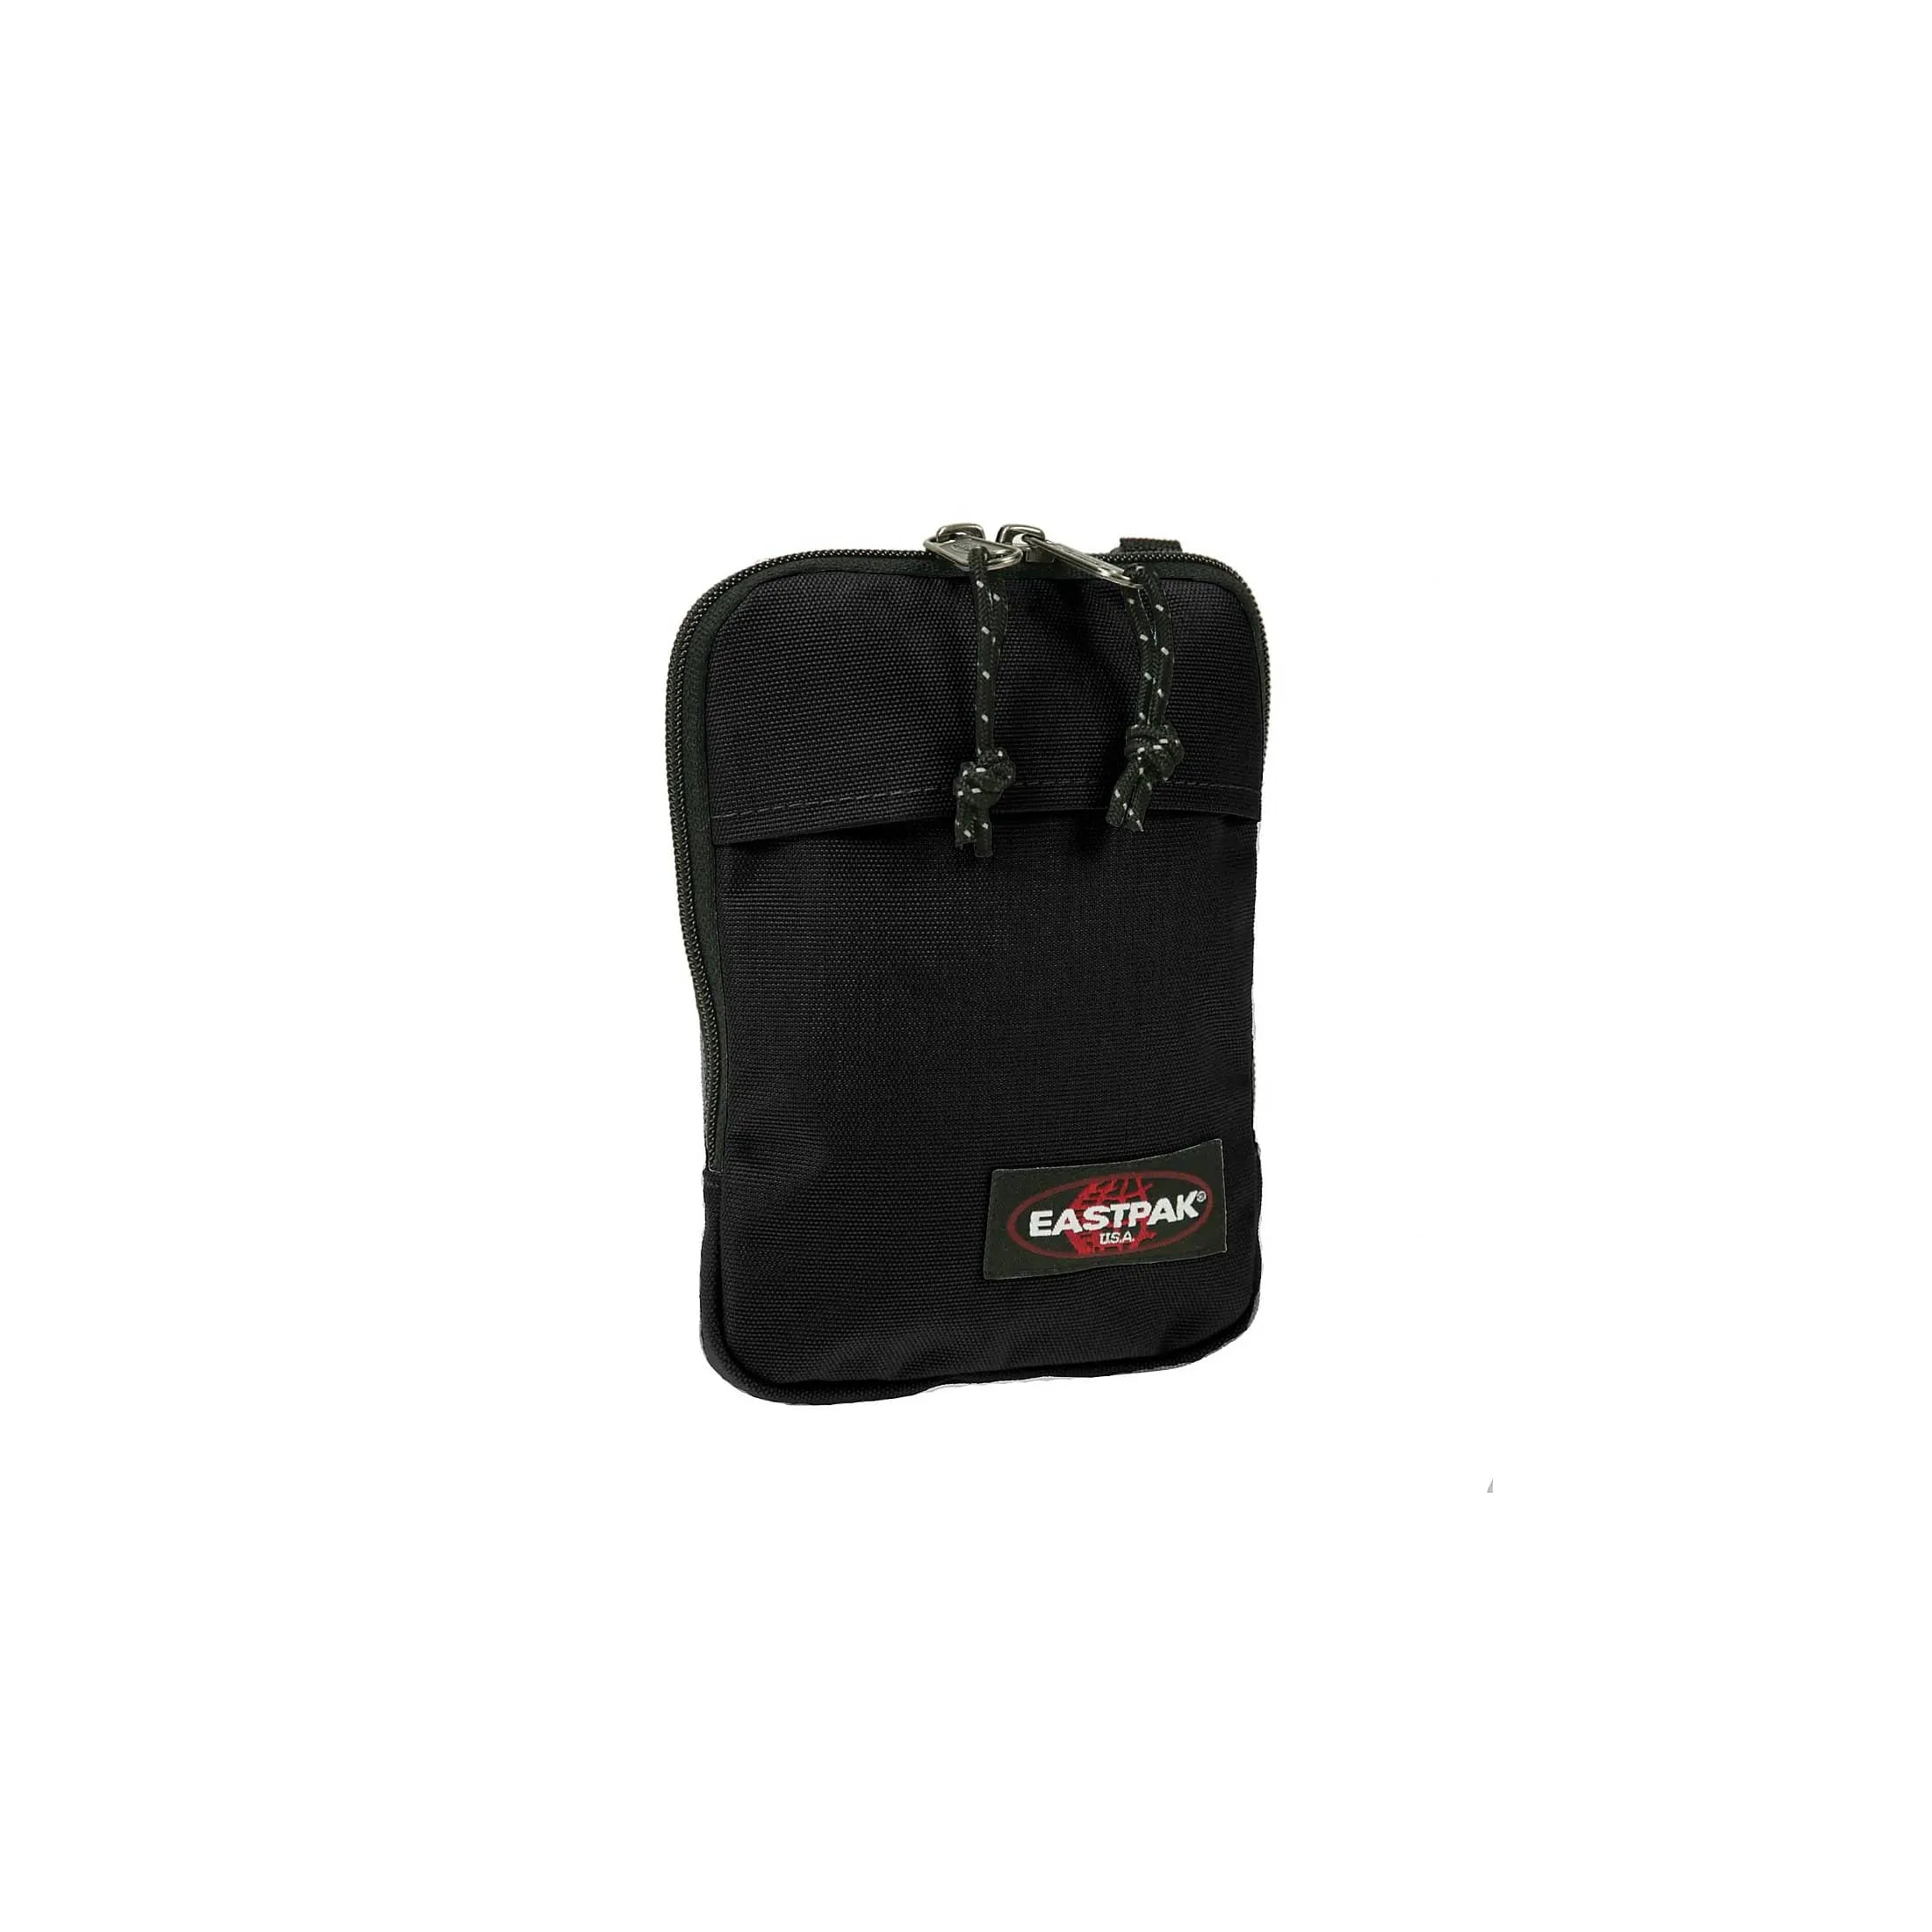 Eastpak Authentic Buddy youth bag 18 cm - black